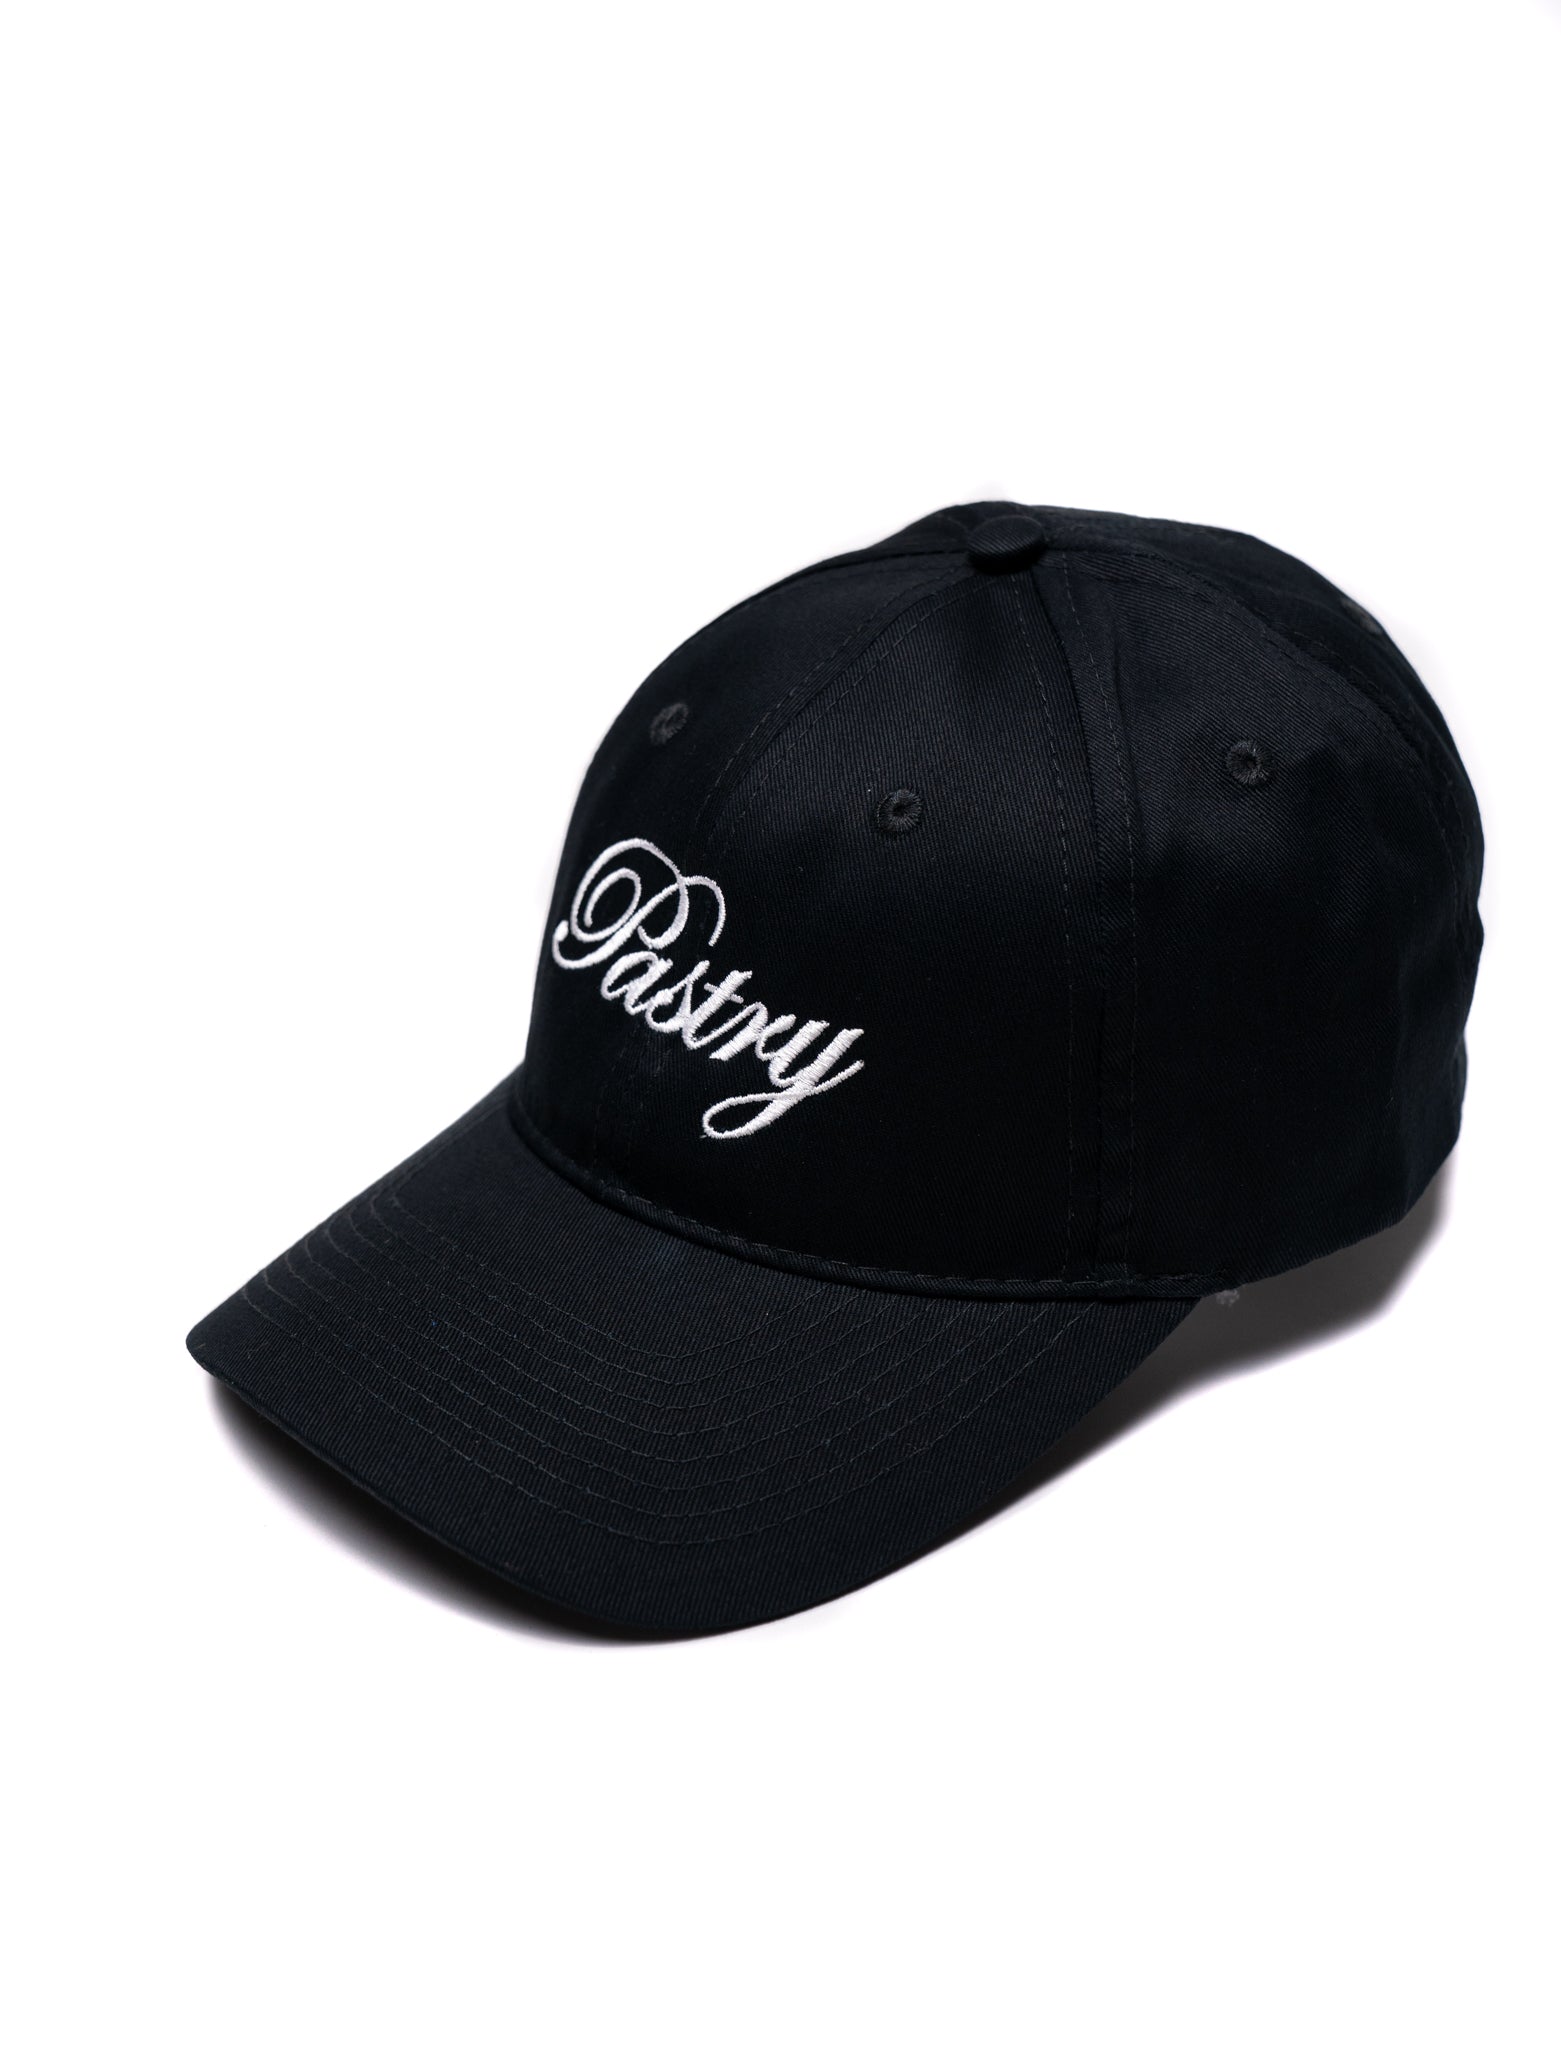 Black Pastry Cap